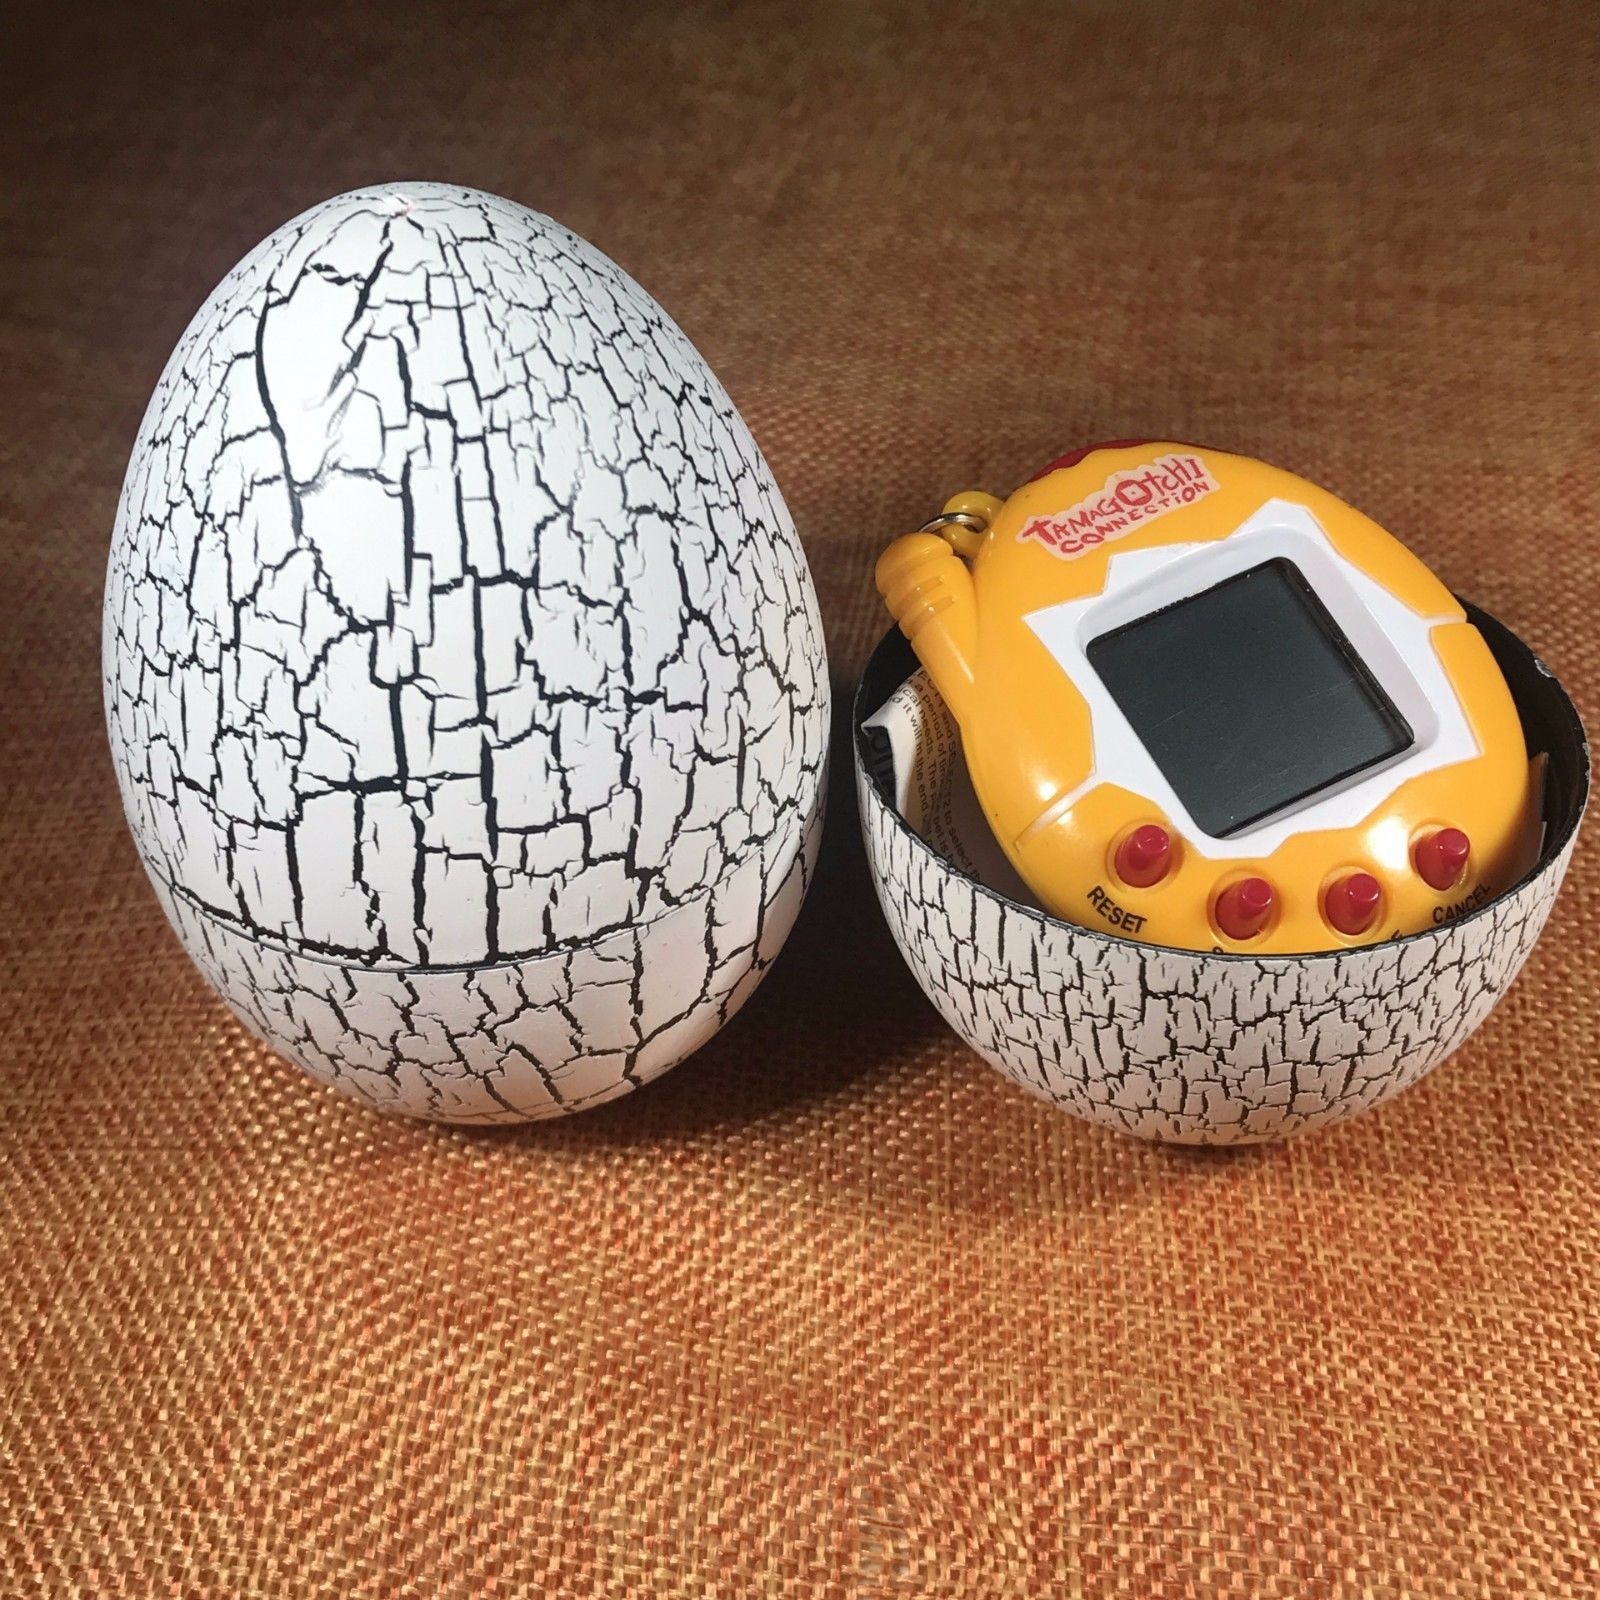 Фото 4 Игрушка электронный питомец Тамагочи в Яйце Динозавра UFT Eggshell Game White